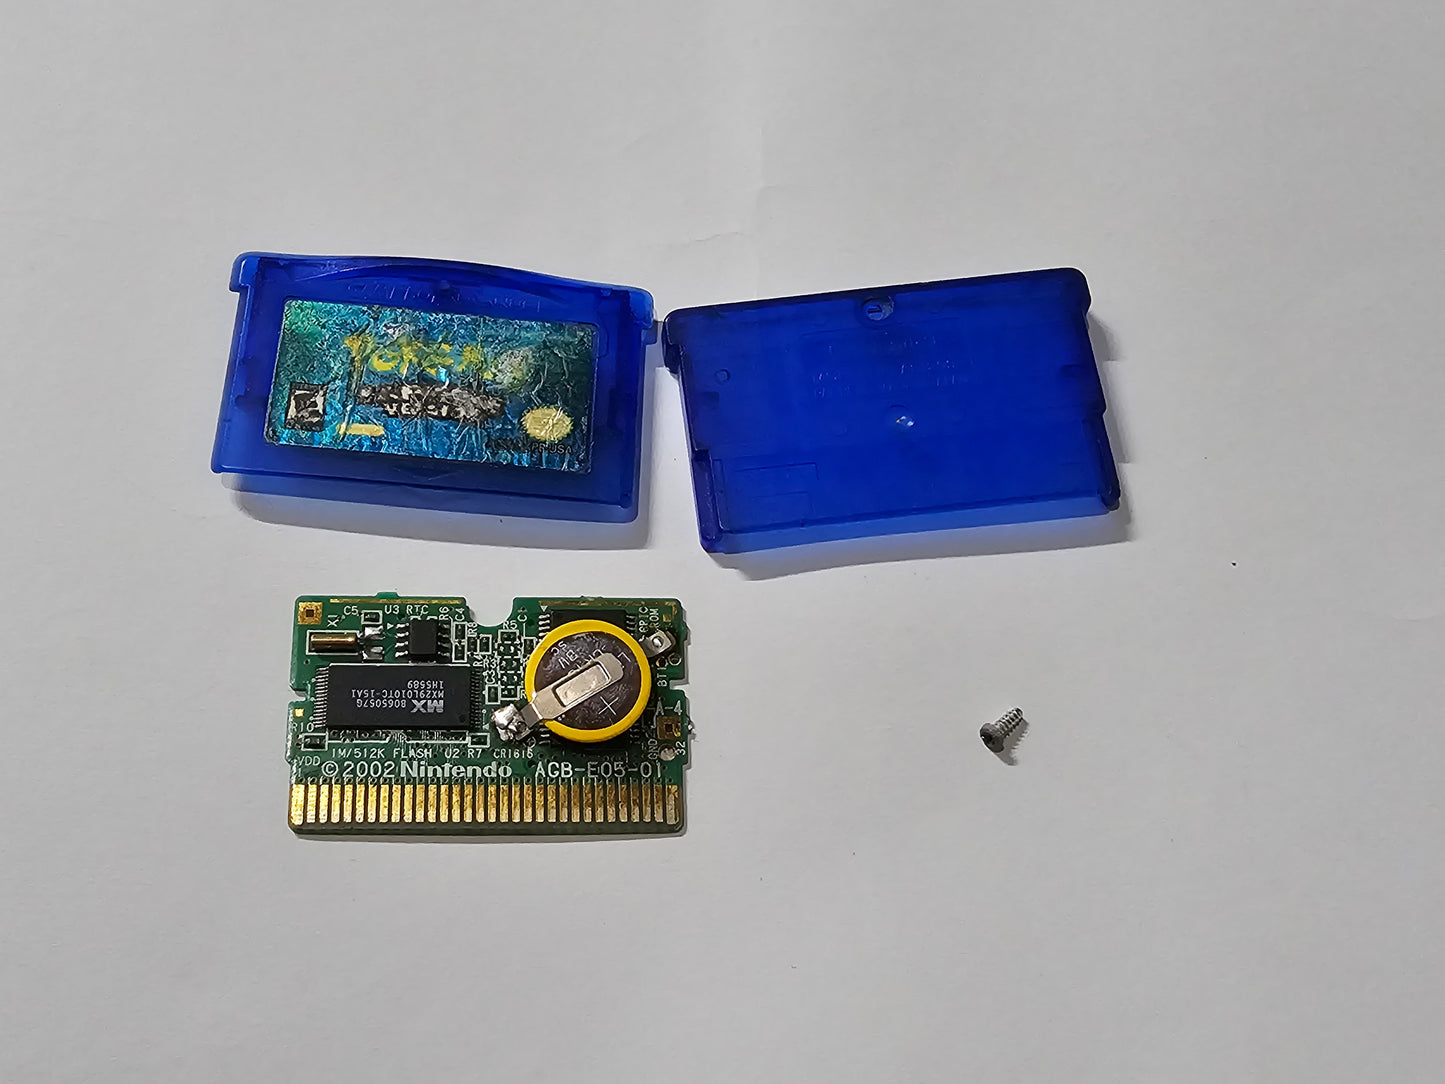 Pokemon Sapphire Solo Cartucho (Loose) Nintendo Game Boy Advance